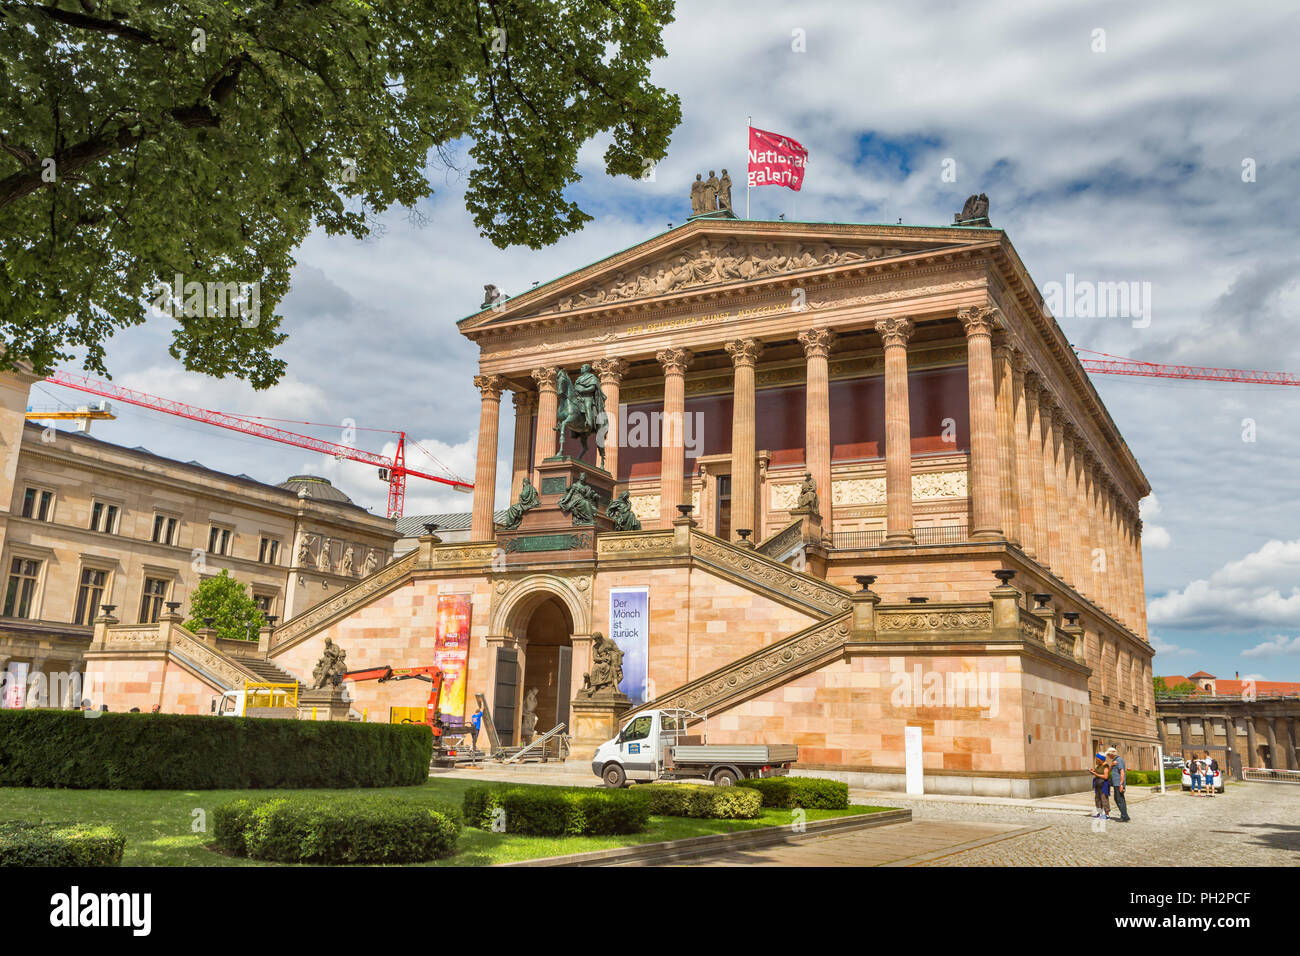 Alte Nationalgalerie, Old National gallery, Museumsinsel, Nuseum island, Berlin, Germany Stock Photo